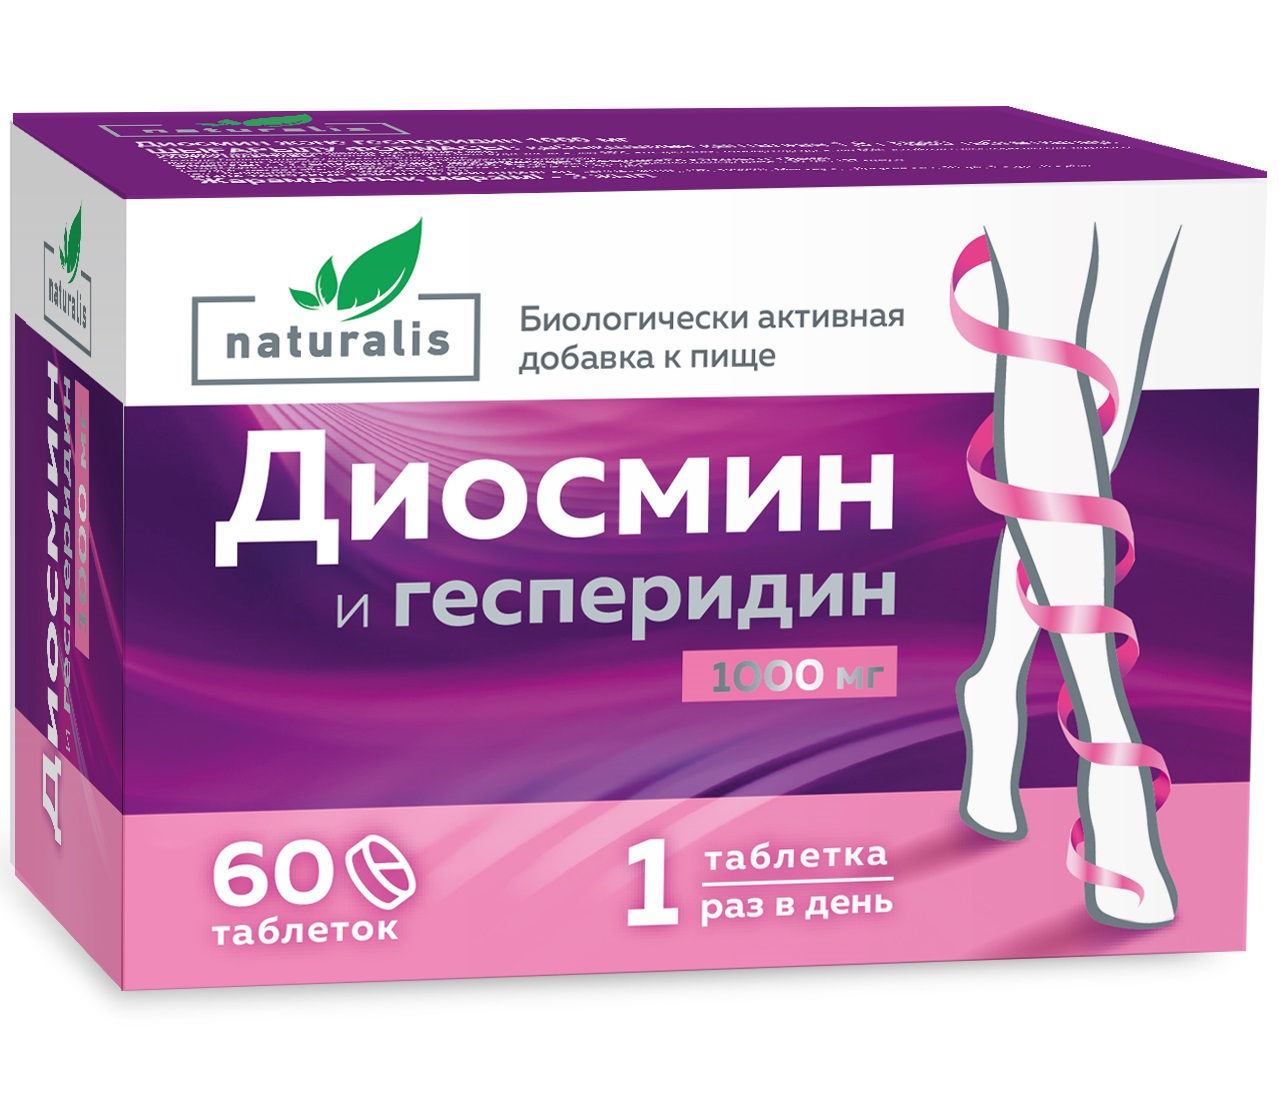 Naturalis Комплекс Диосмин + гесперидин 1000 мг, 60 таблеток (Naturalis, )